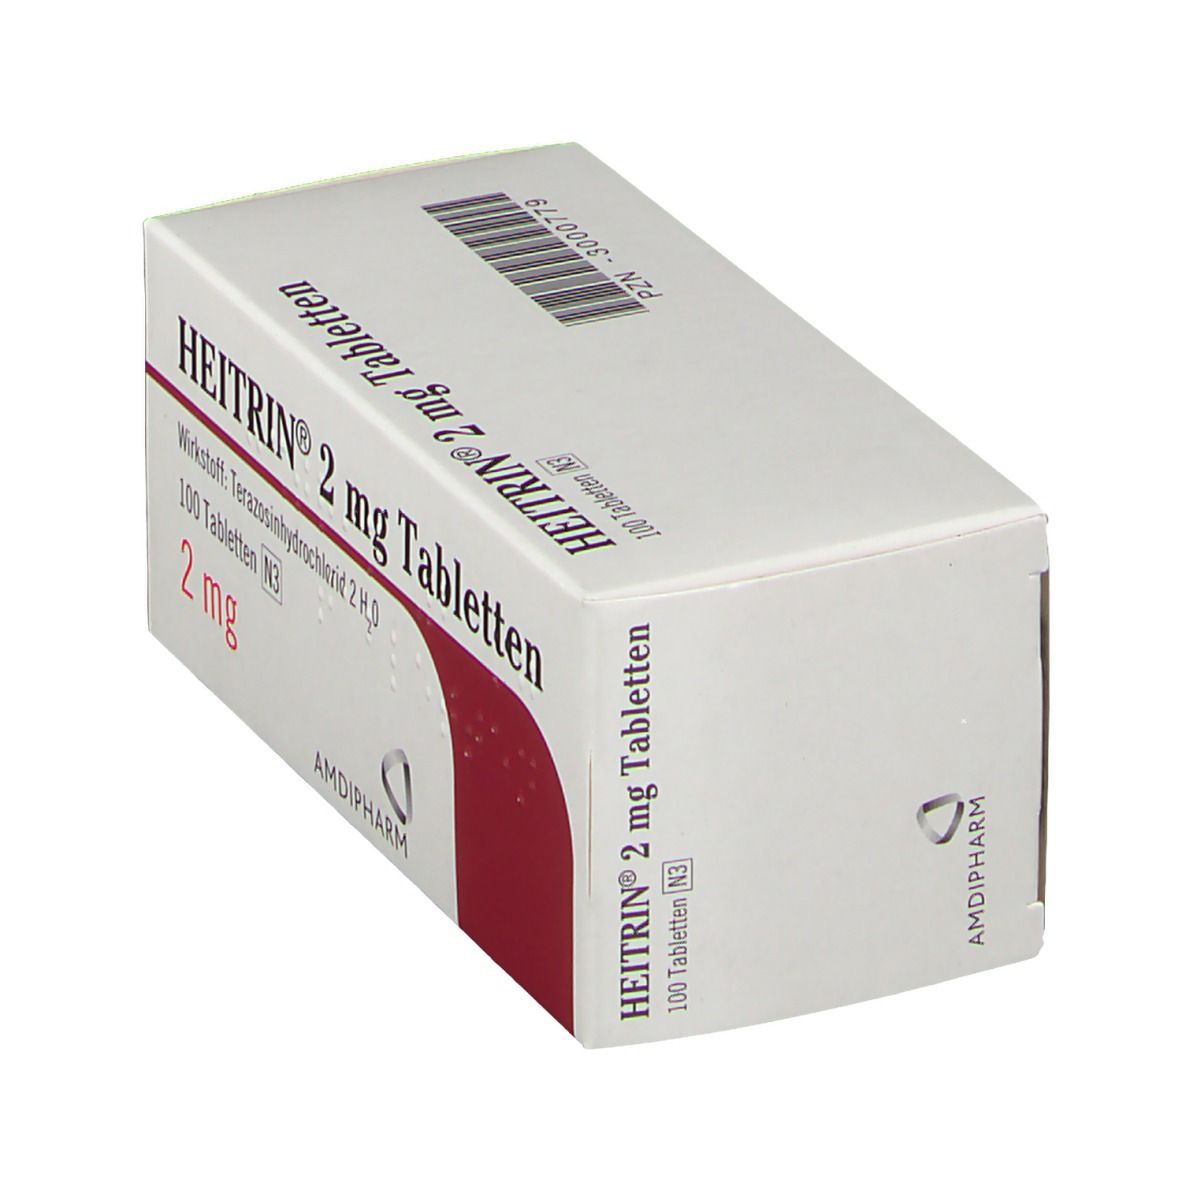 Heitrin 2 mg